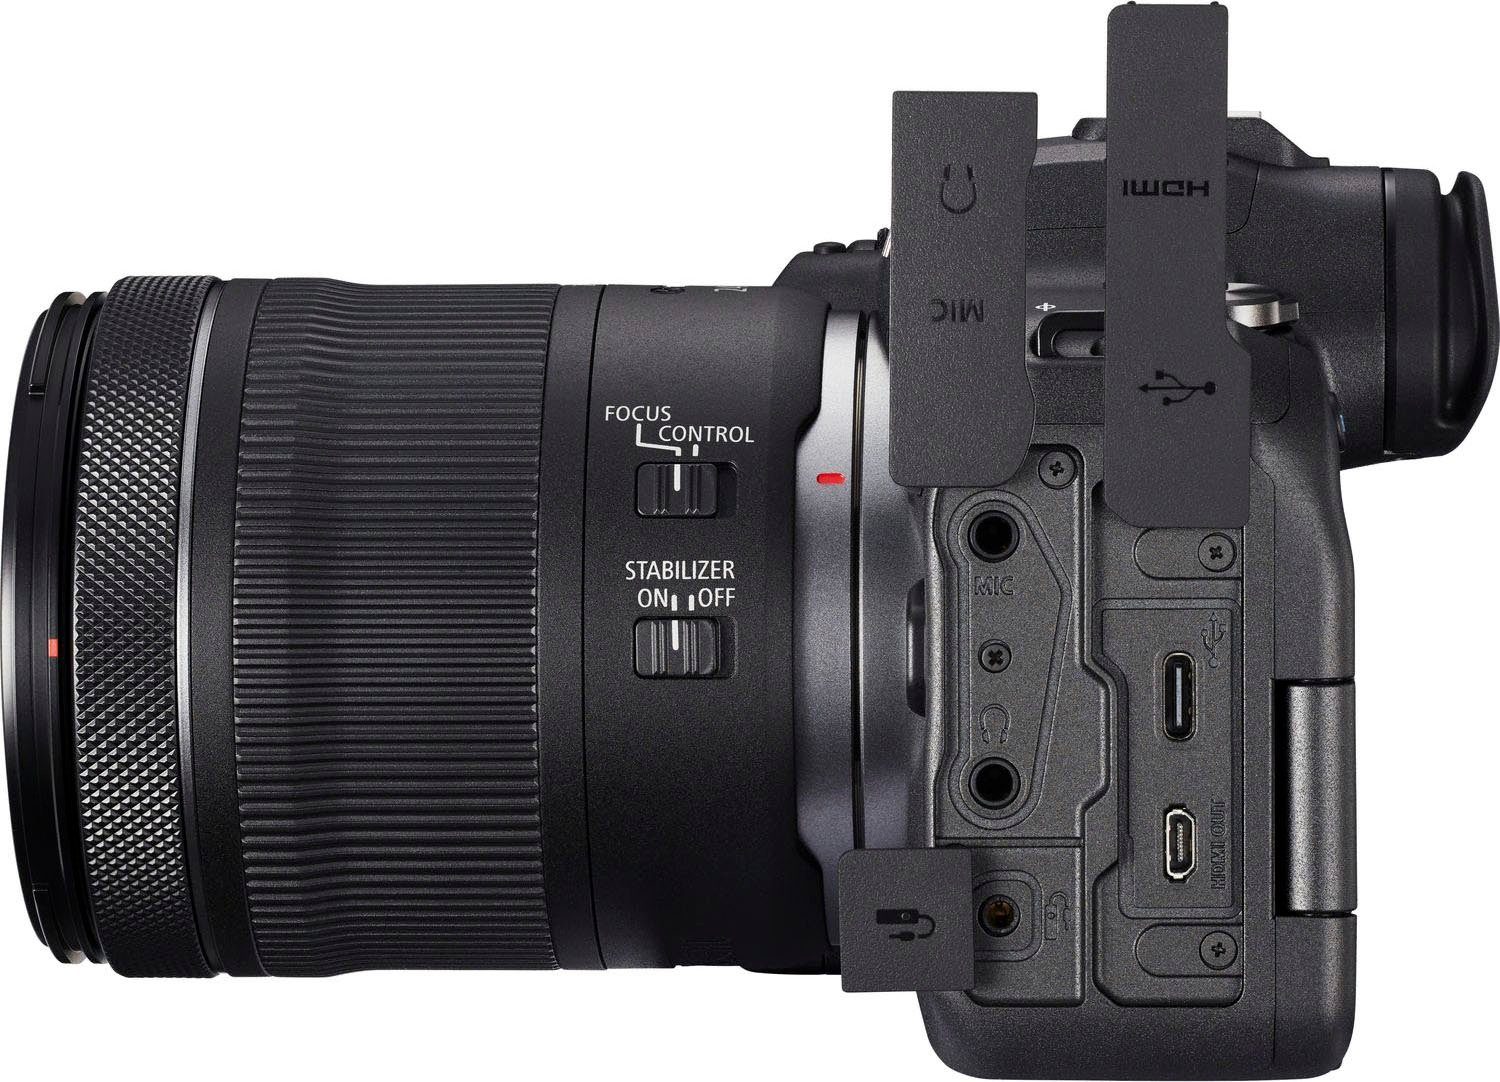 24-105mm WLAN + Systemkamera STM, F4-7.1 Canon 20,1 RF STM F4-7.1 IS (WiFi) Bluetooth, 24-105mm Gehäuse IS EOS R6 (RF MP,